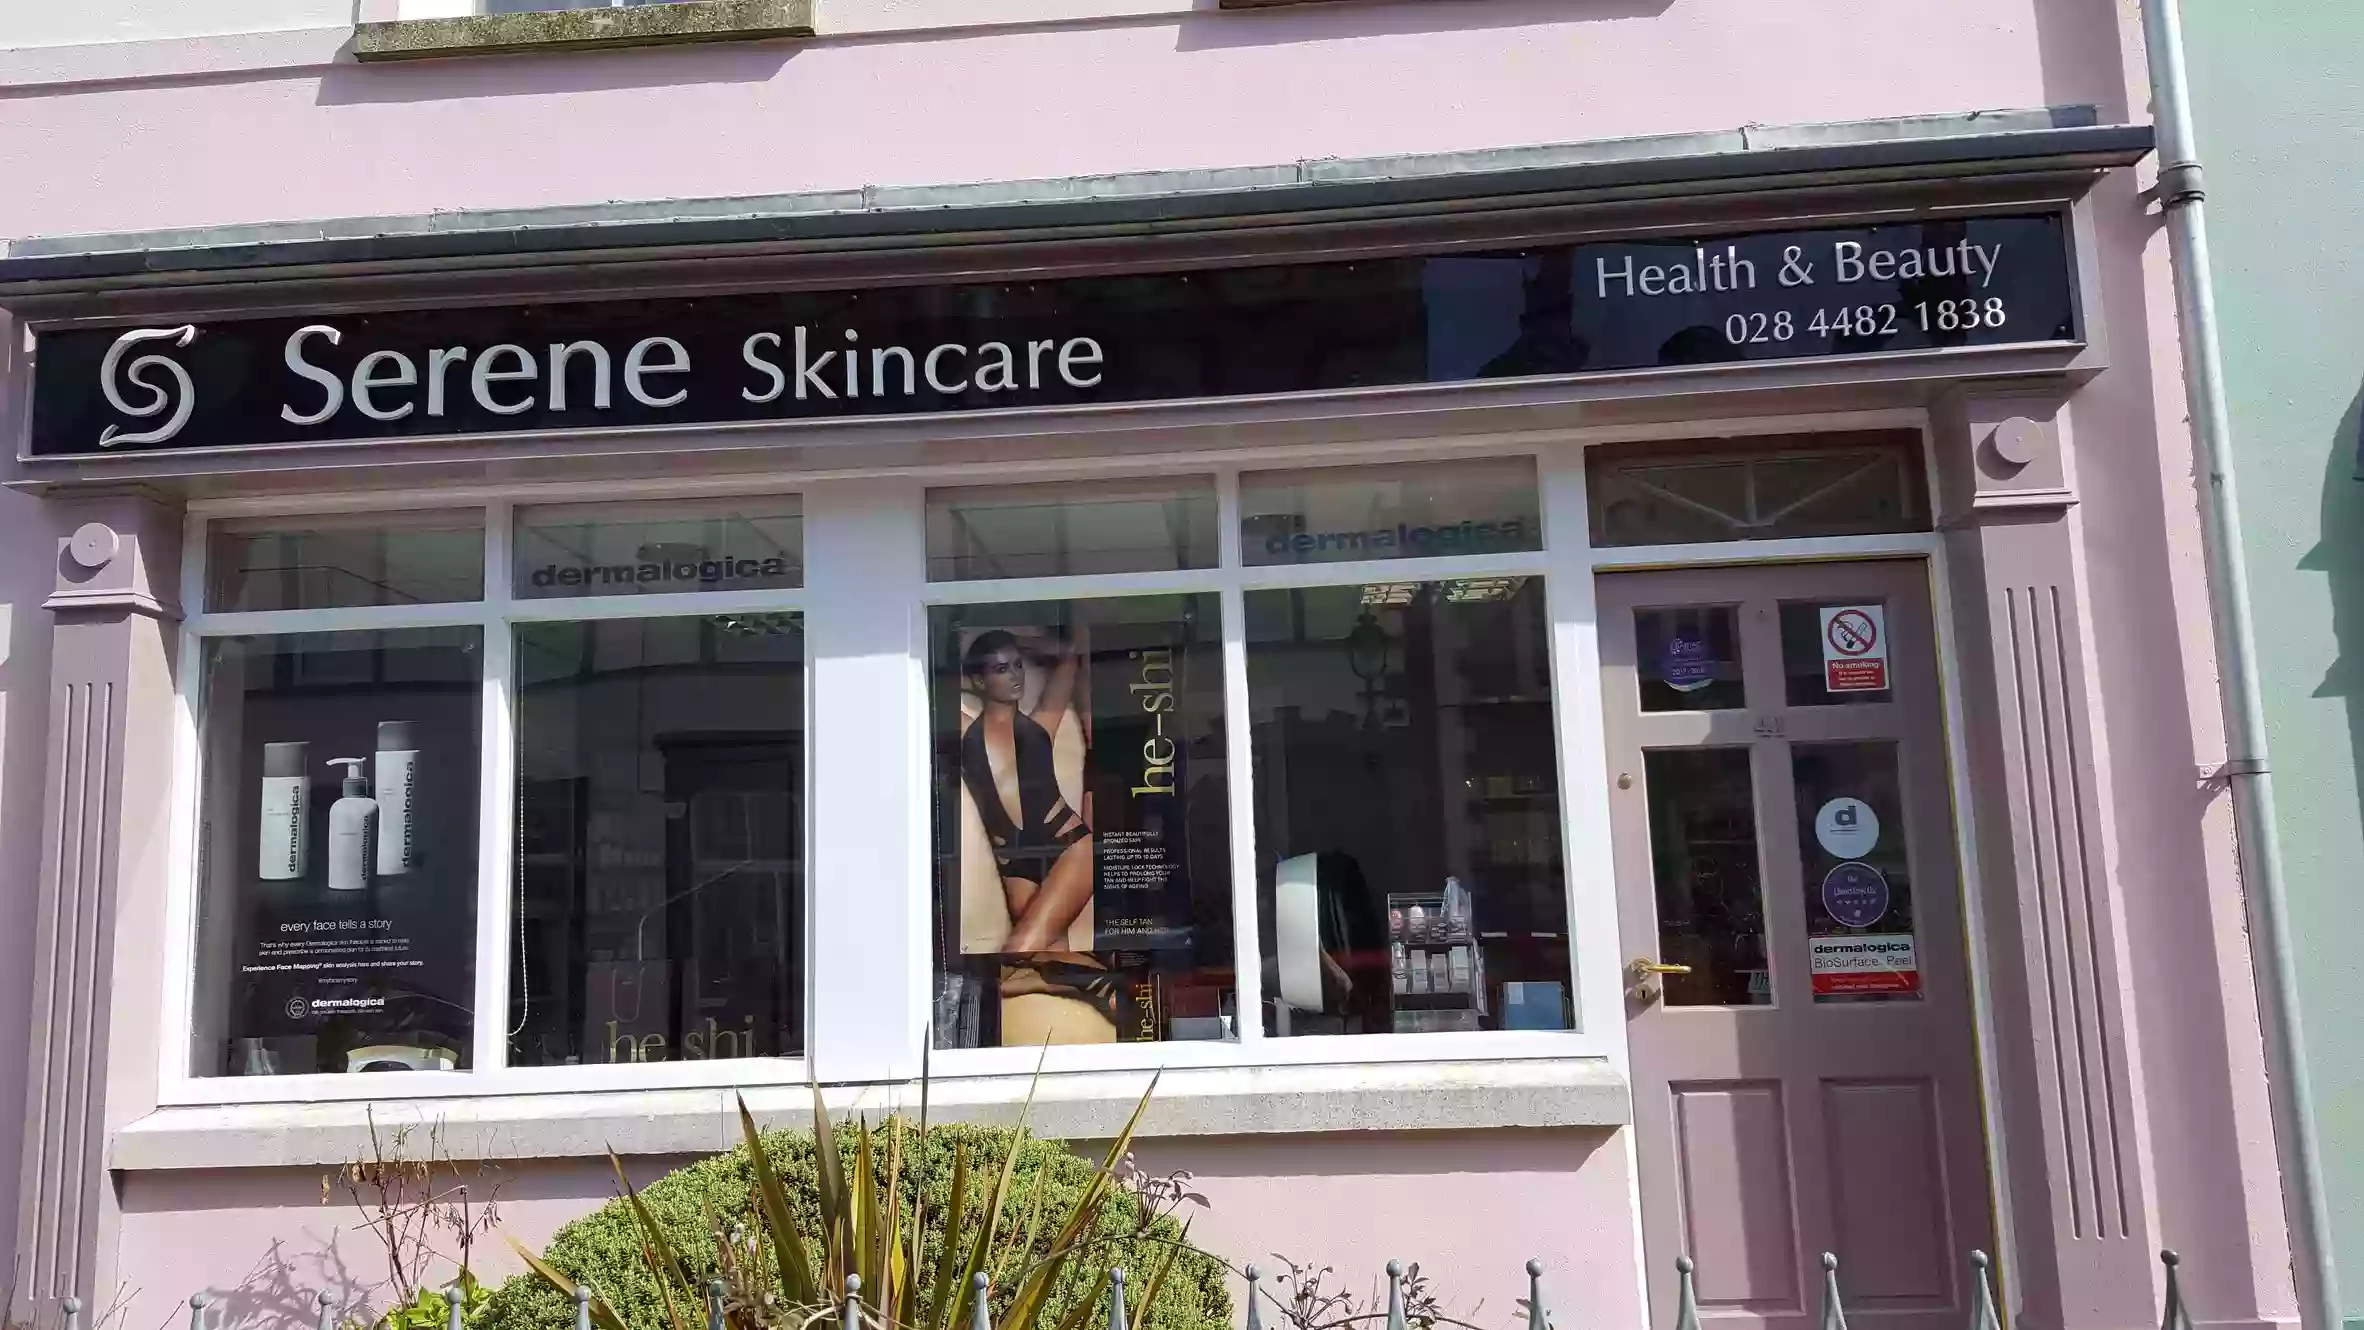 Serene Skincare Health & Beauty Clinic